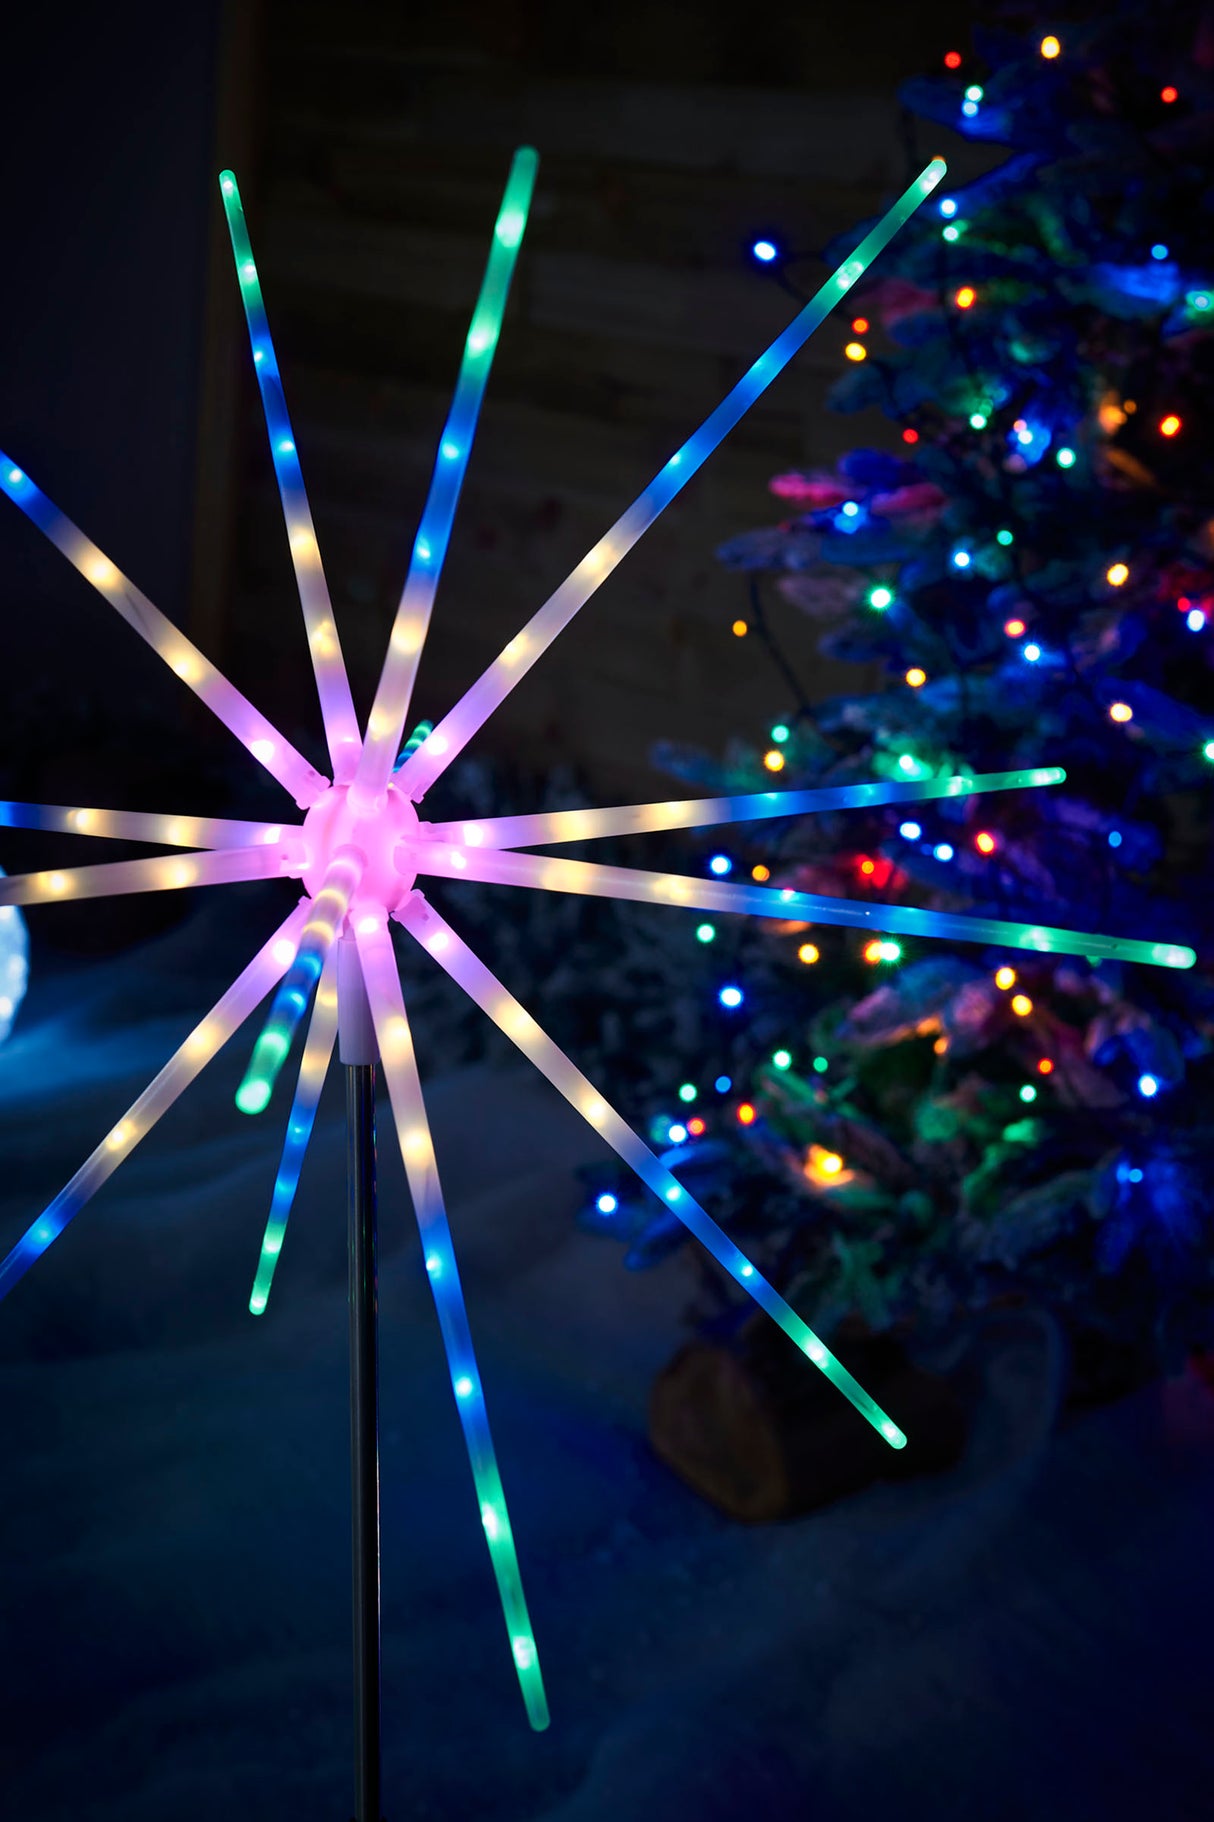 Starburst Pathway Stake Light, Multi-Coloured, 98 cm